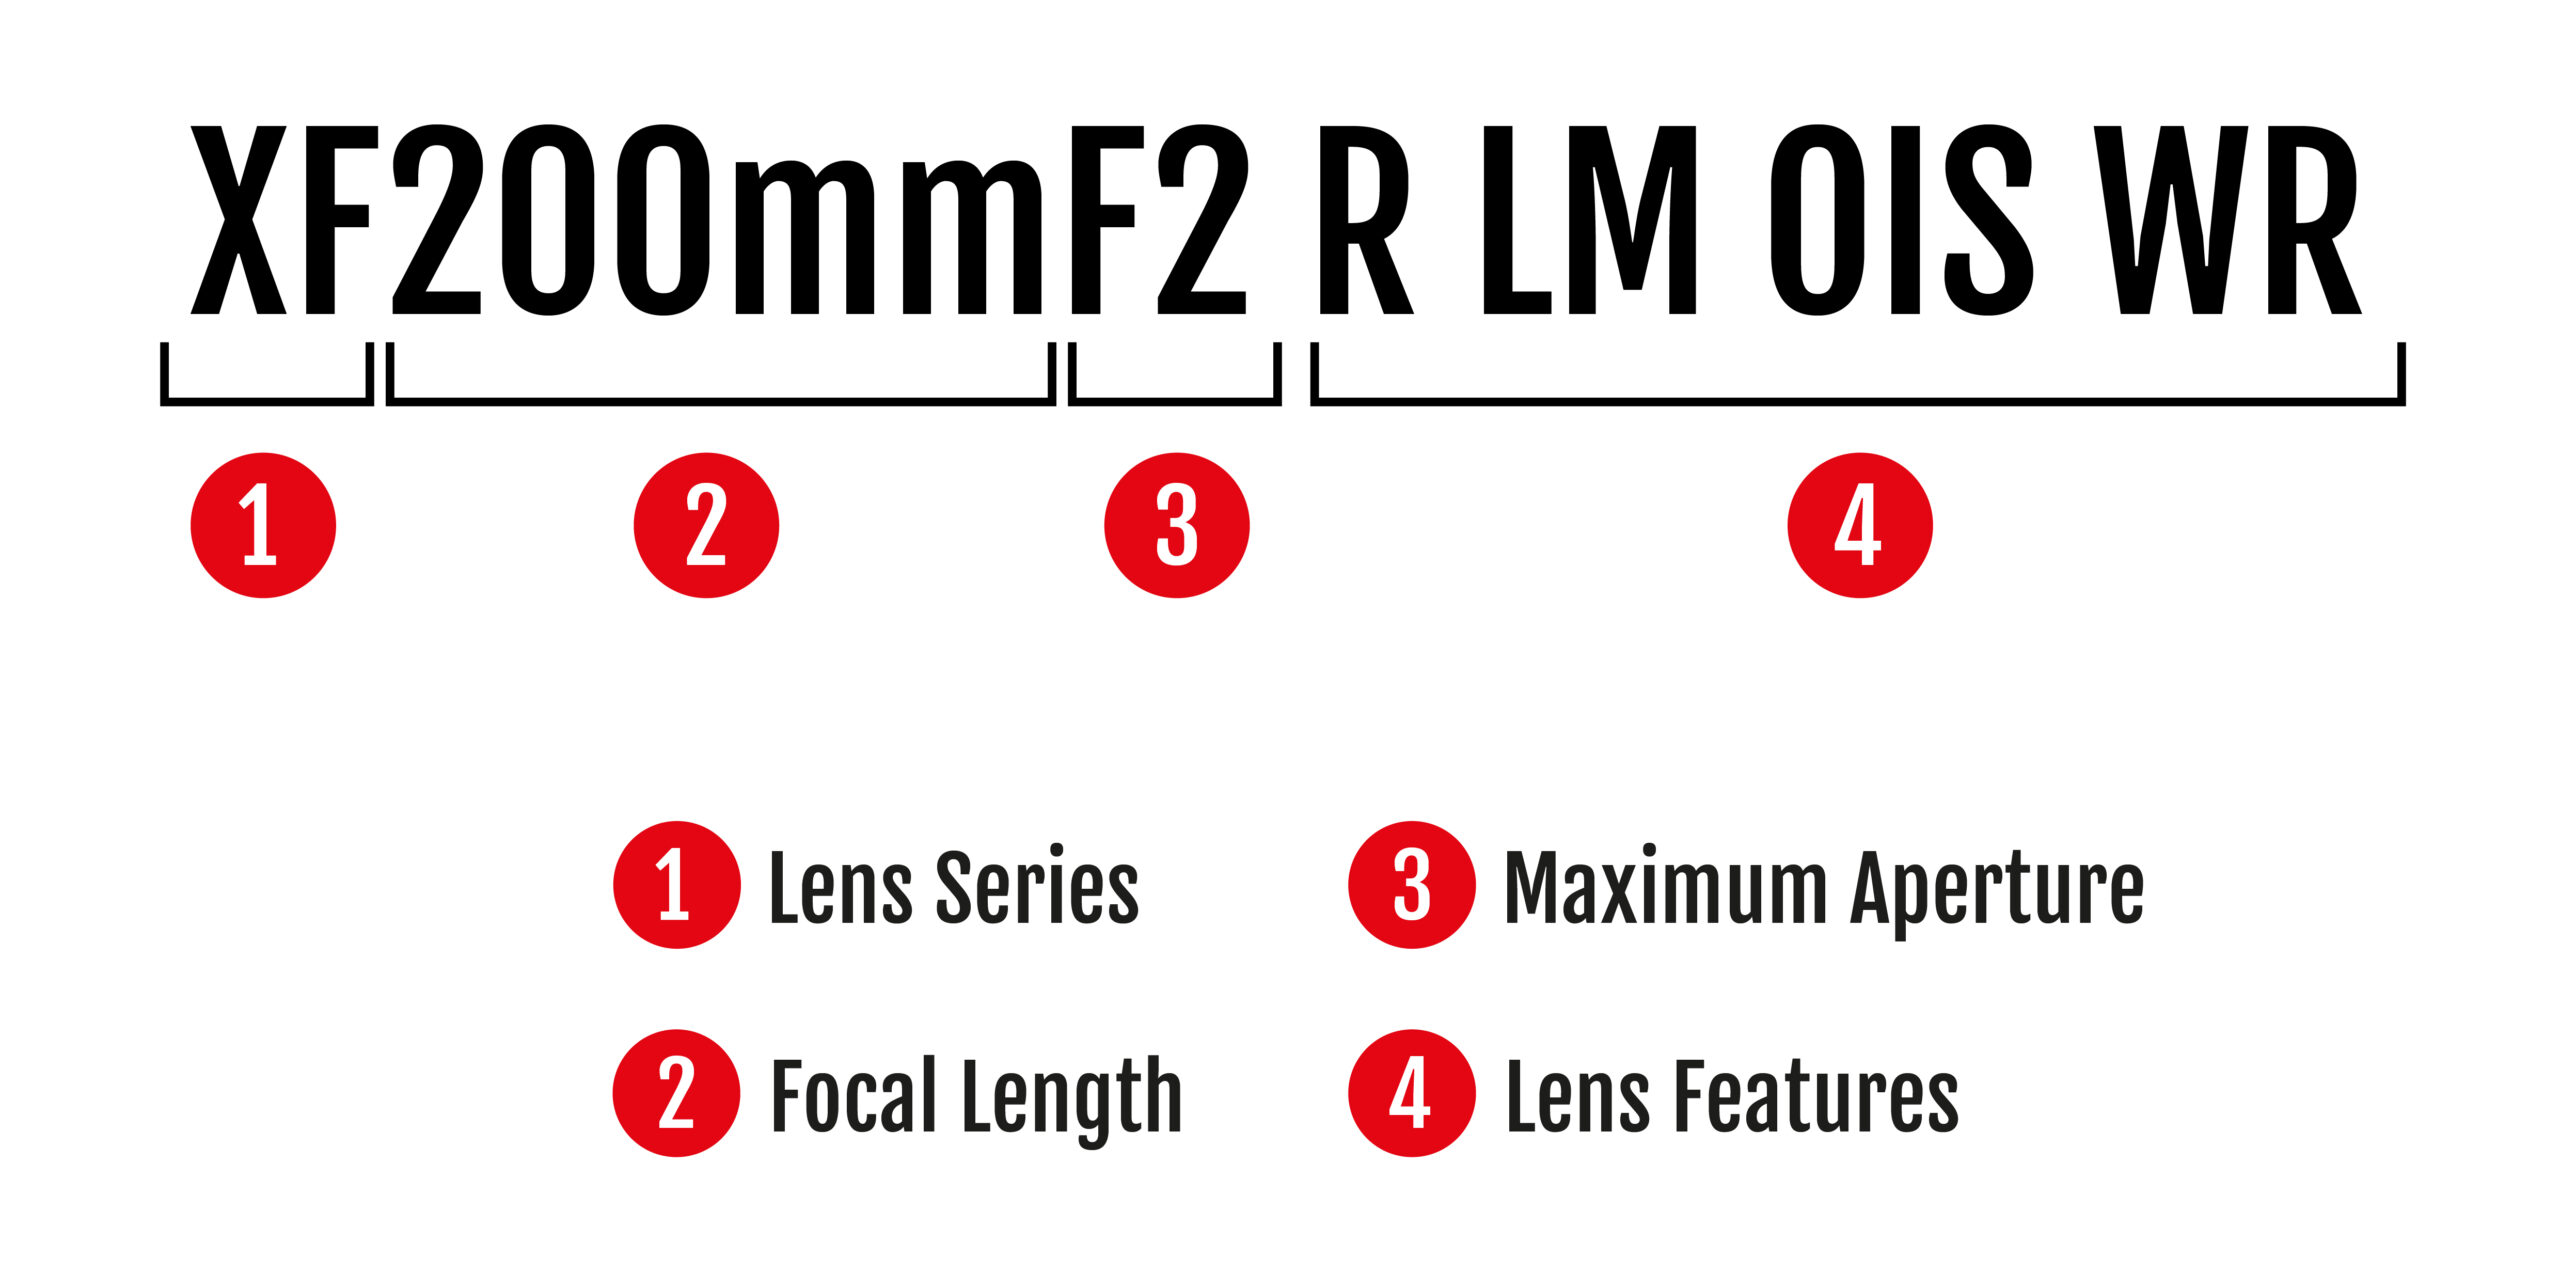 Key for decoding Fujinon lens names